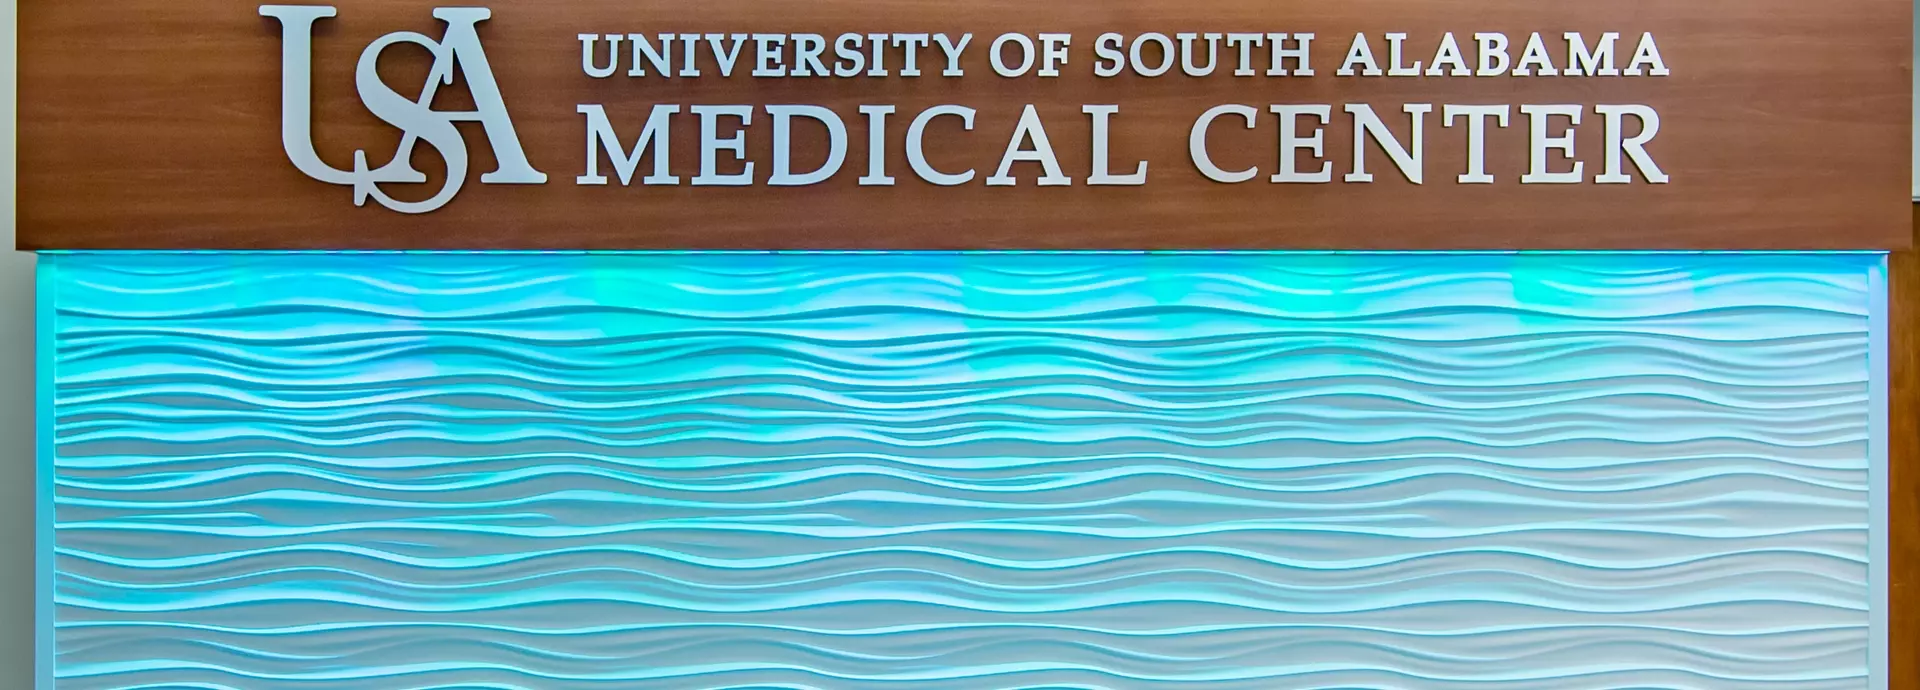 University of South Alabama Medical Center_2.jpg